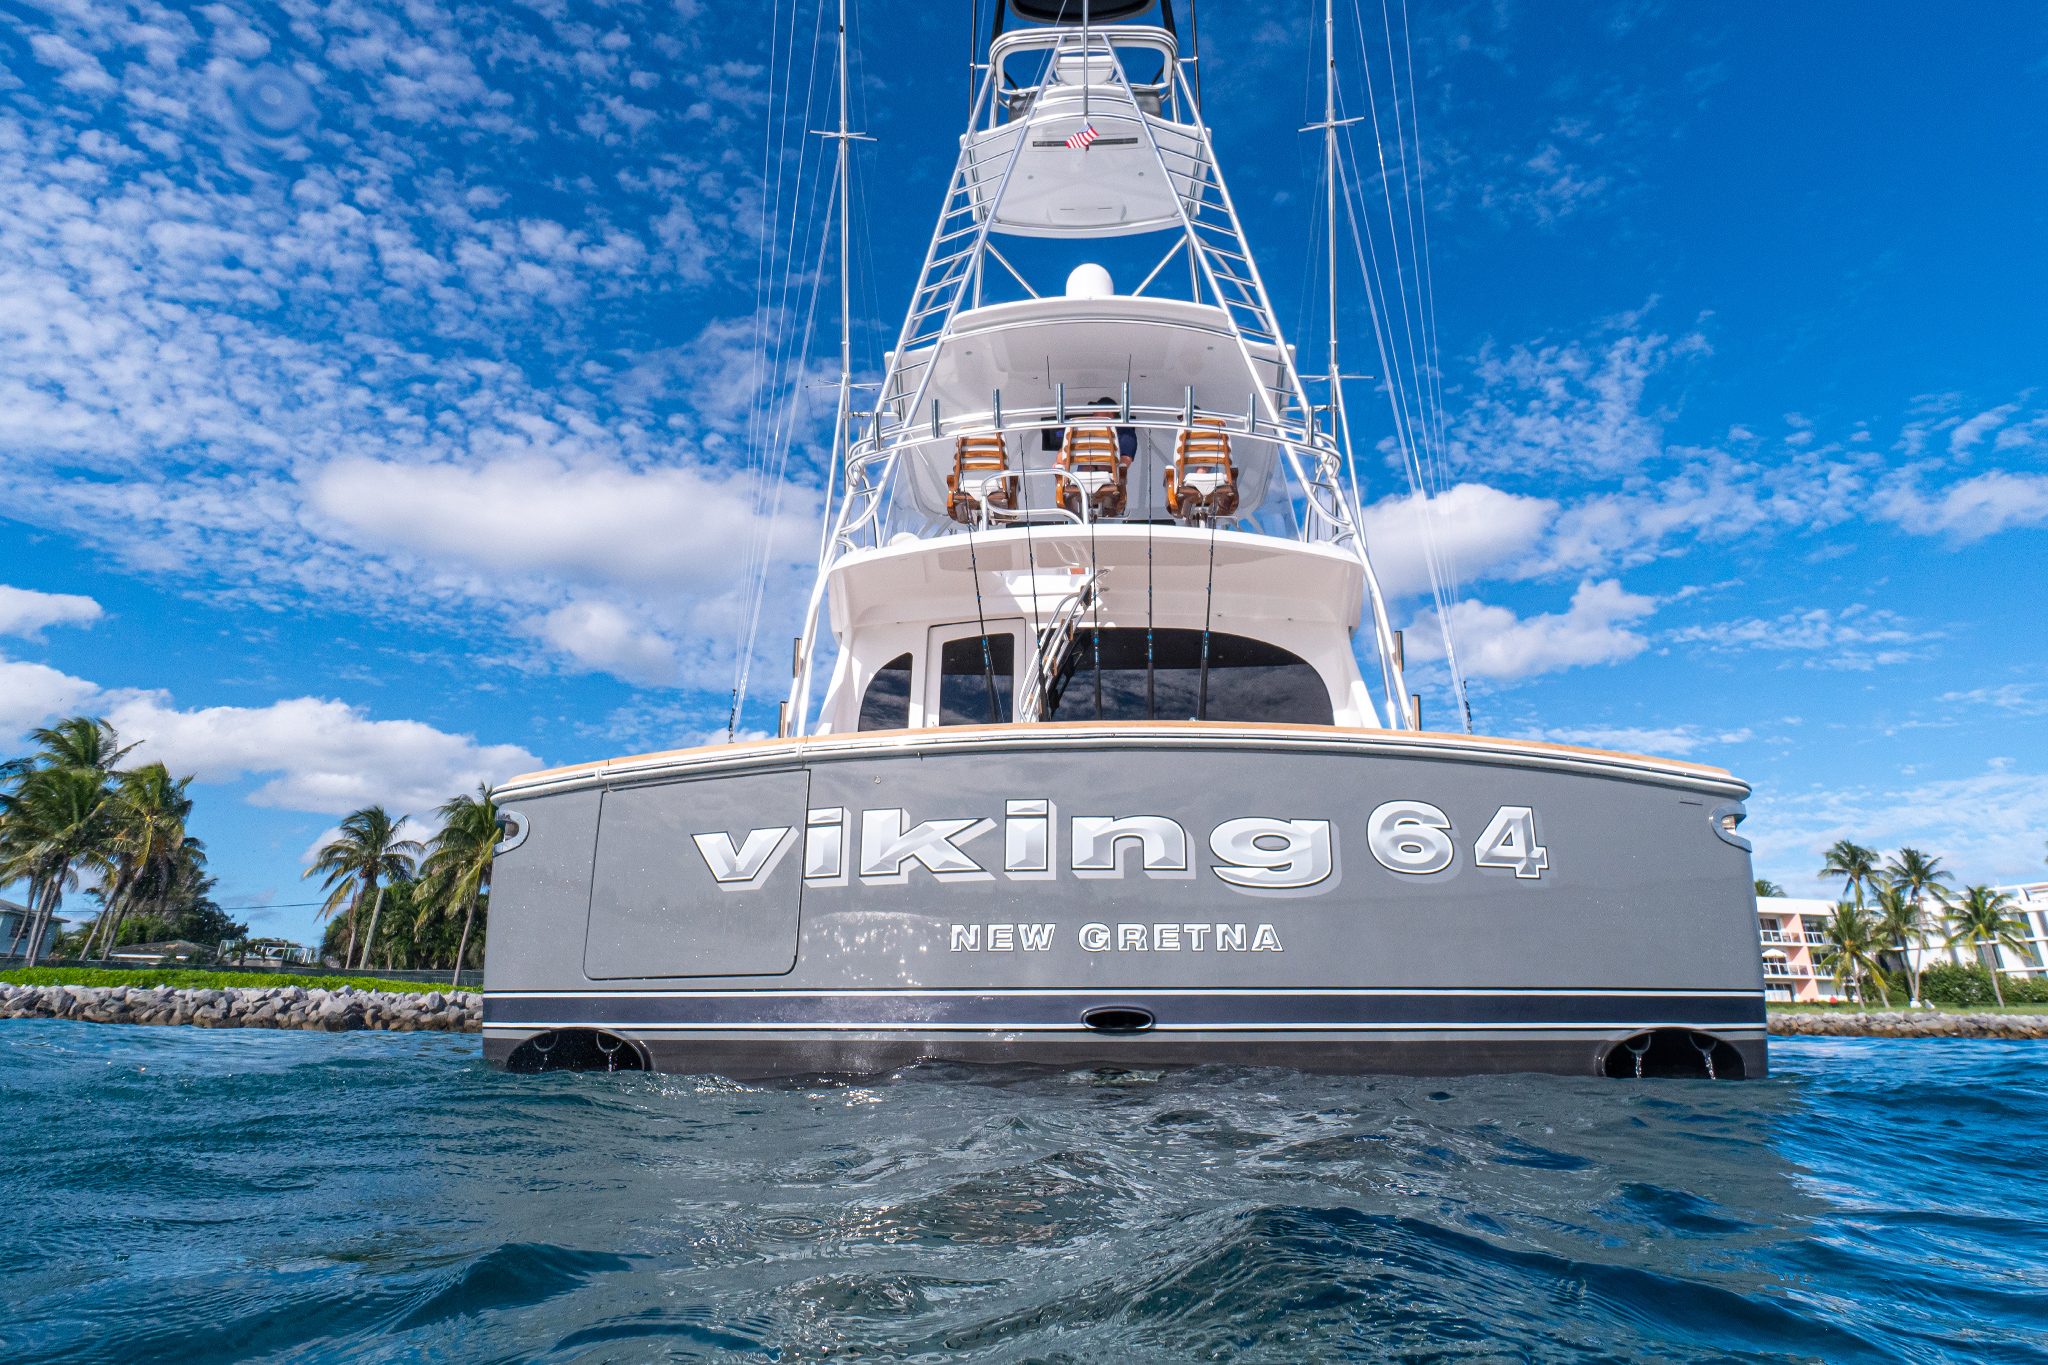 Xcelerator Boatworks New 64-Foot Sport-Fishing Boat